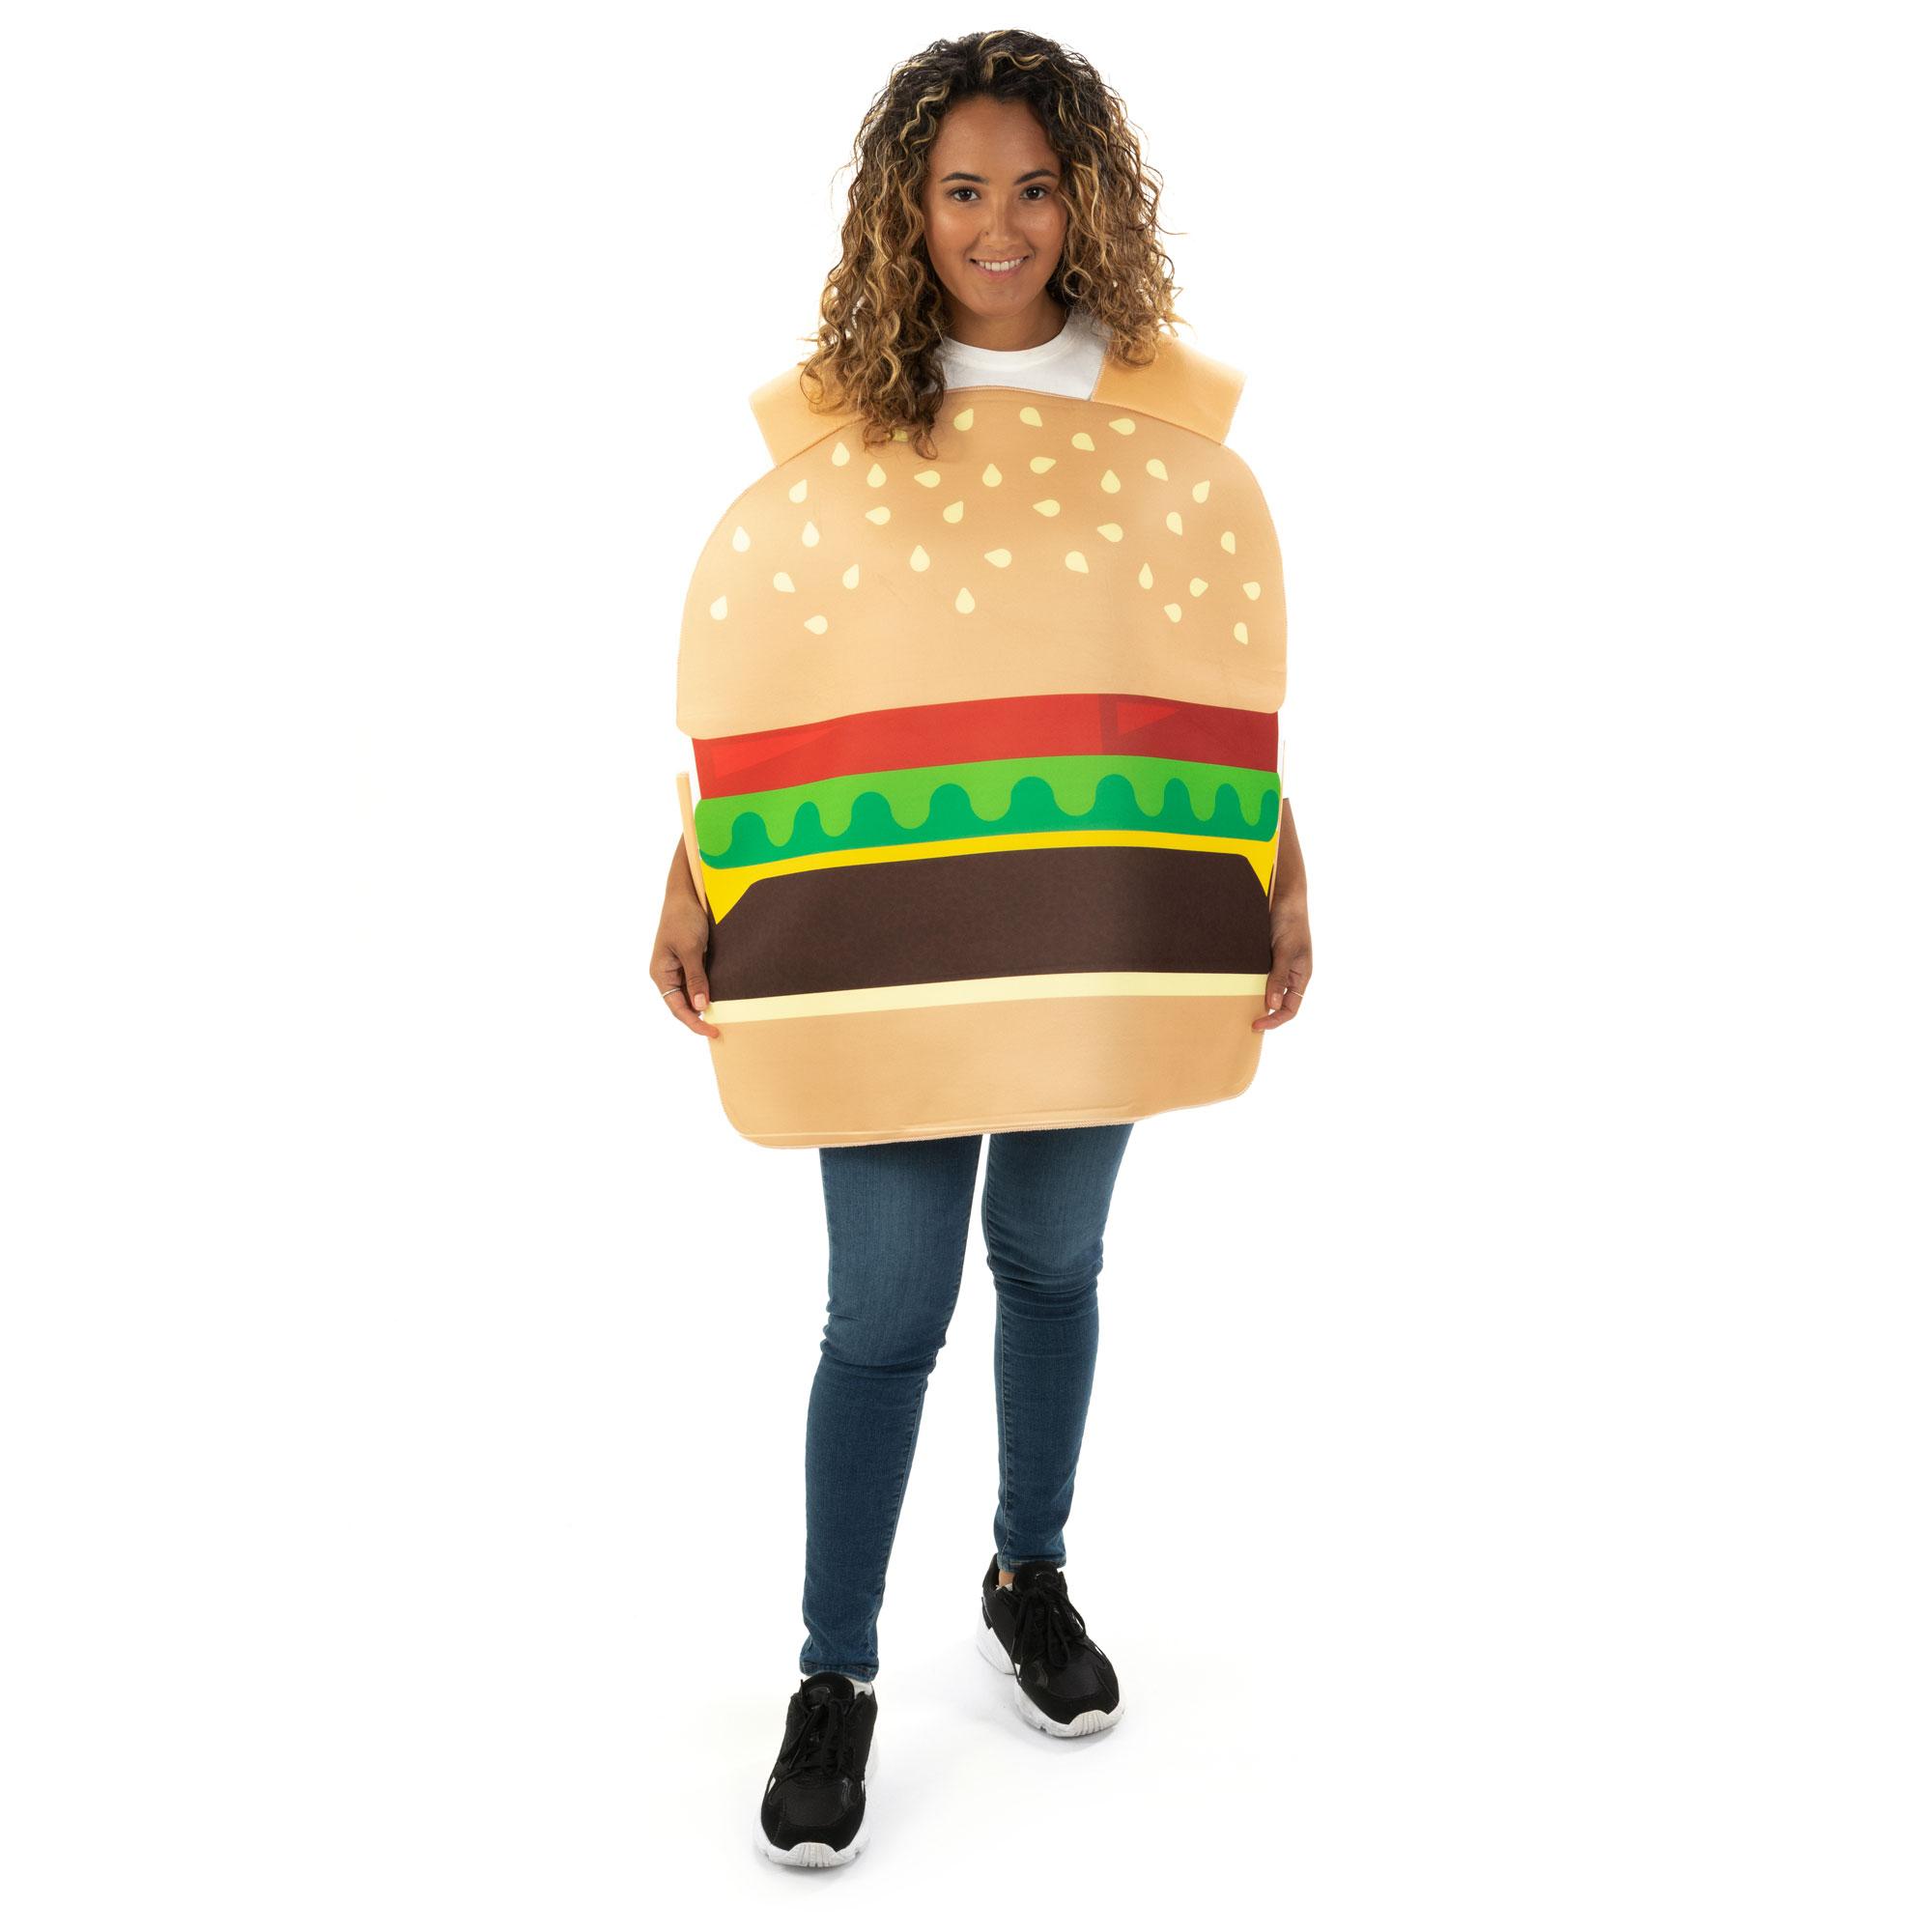 Beefy Burger Costume